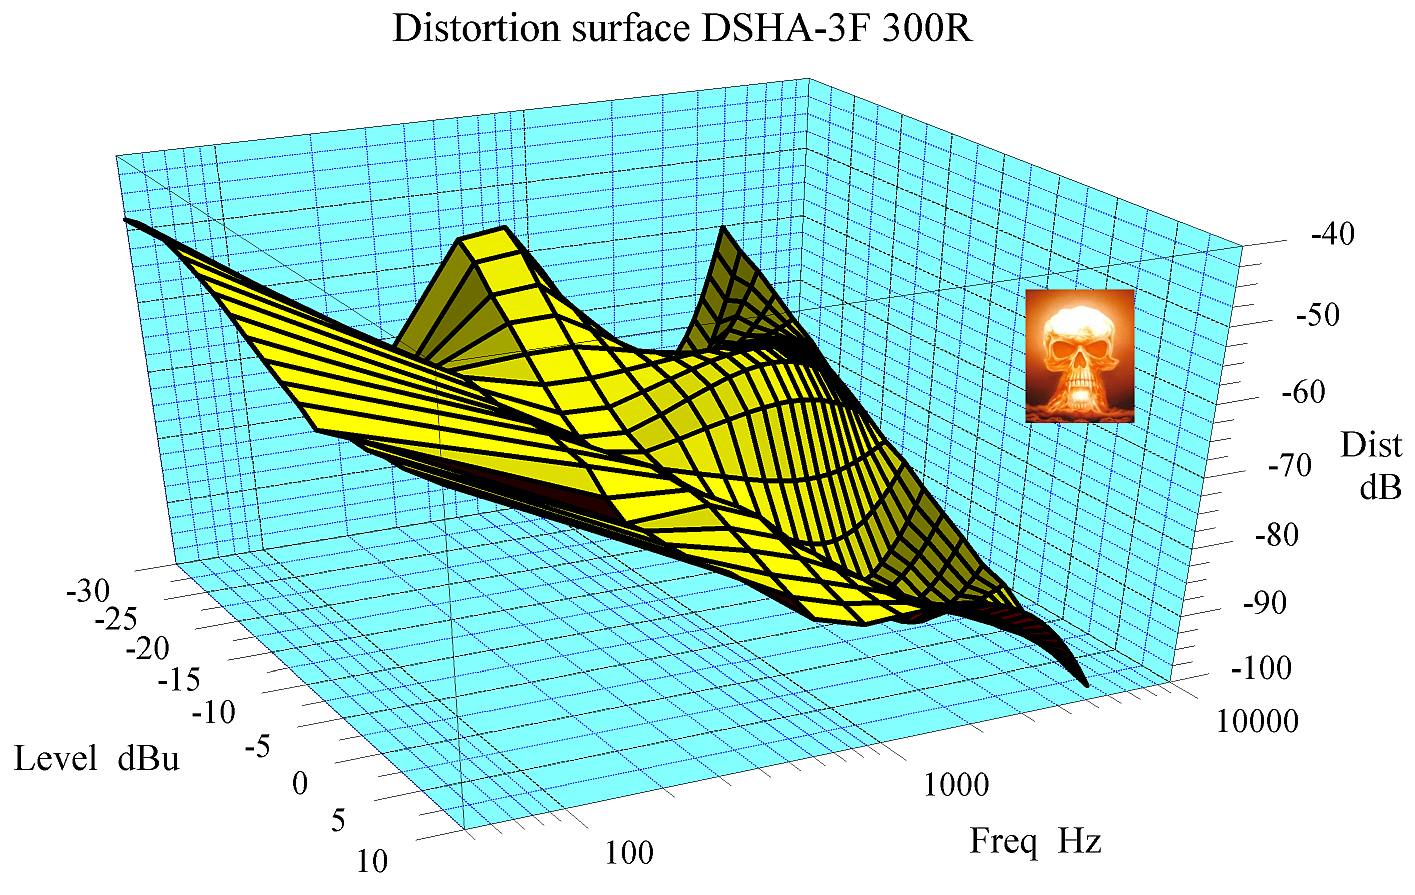 03 Distortion surface DSHA-3F 300R rotated wm adj.png